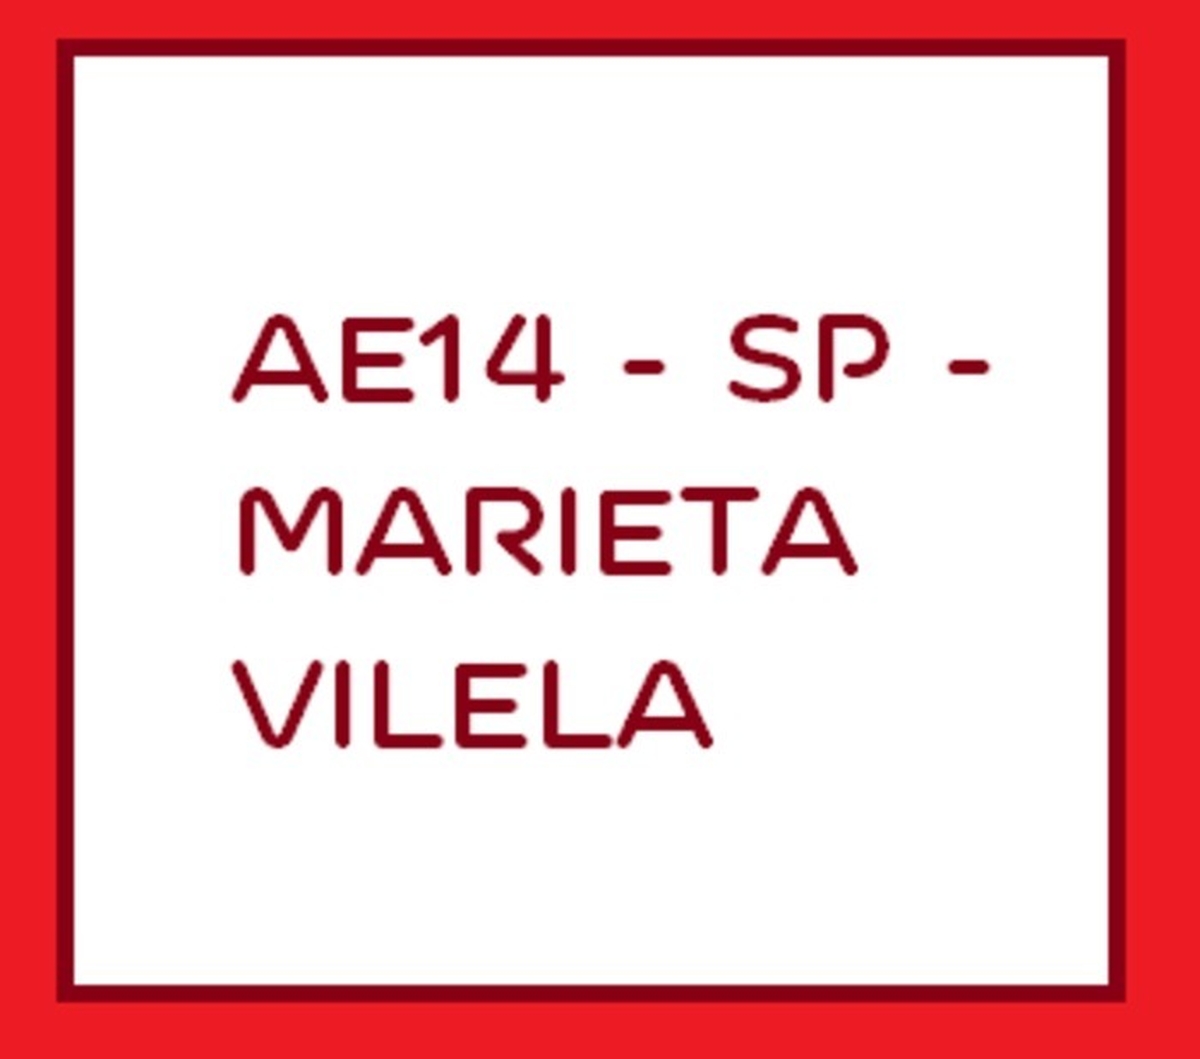 AE14 - SP - Marieta Vilela